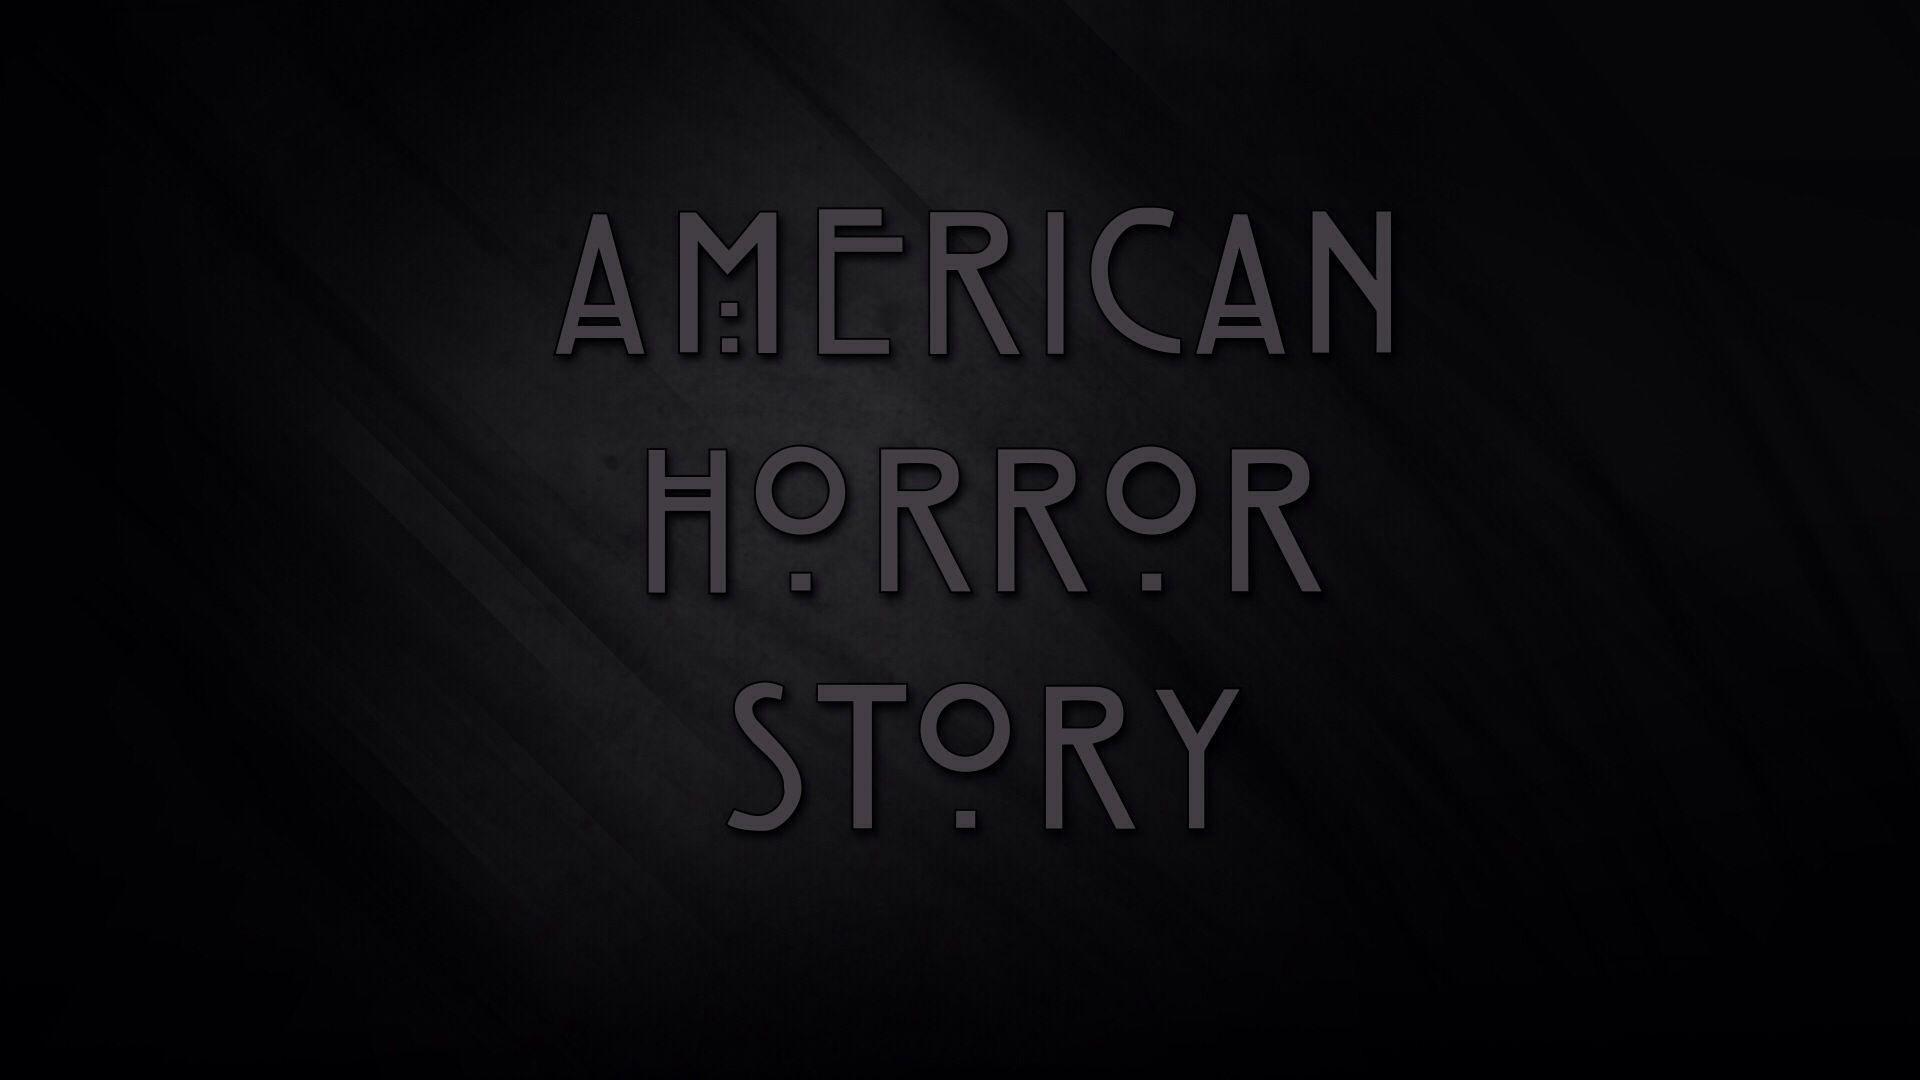 American Horror Story HD Wallpaper for desktop download